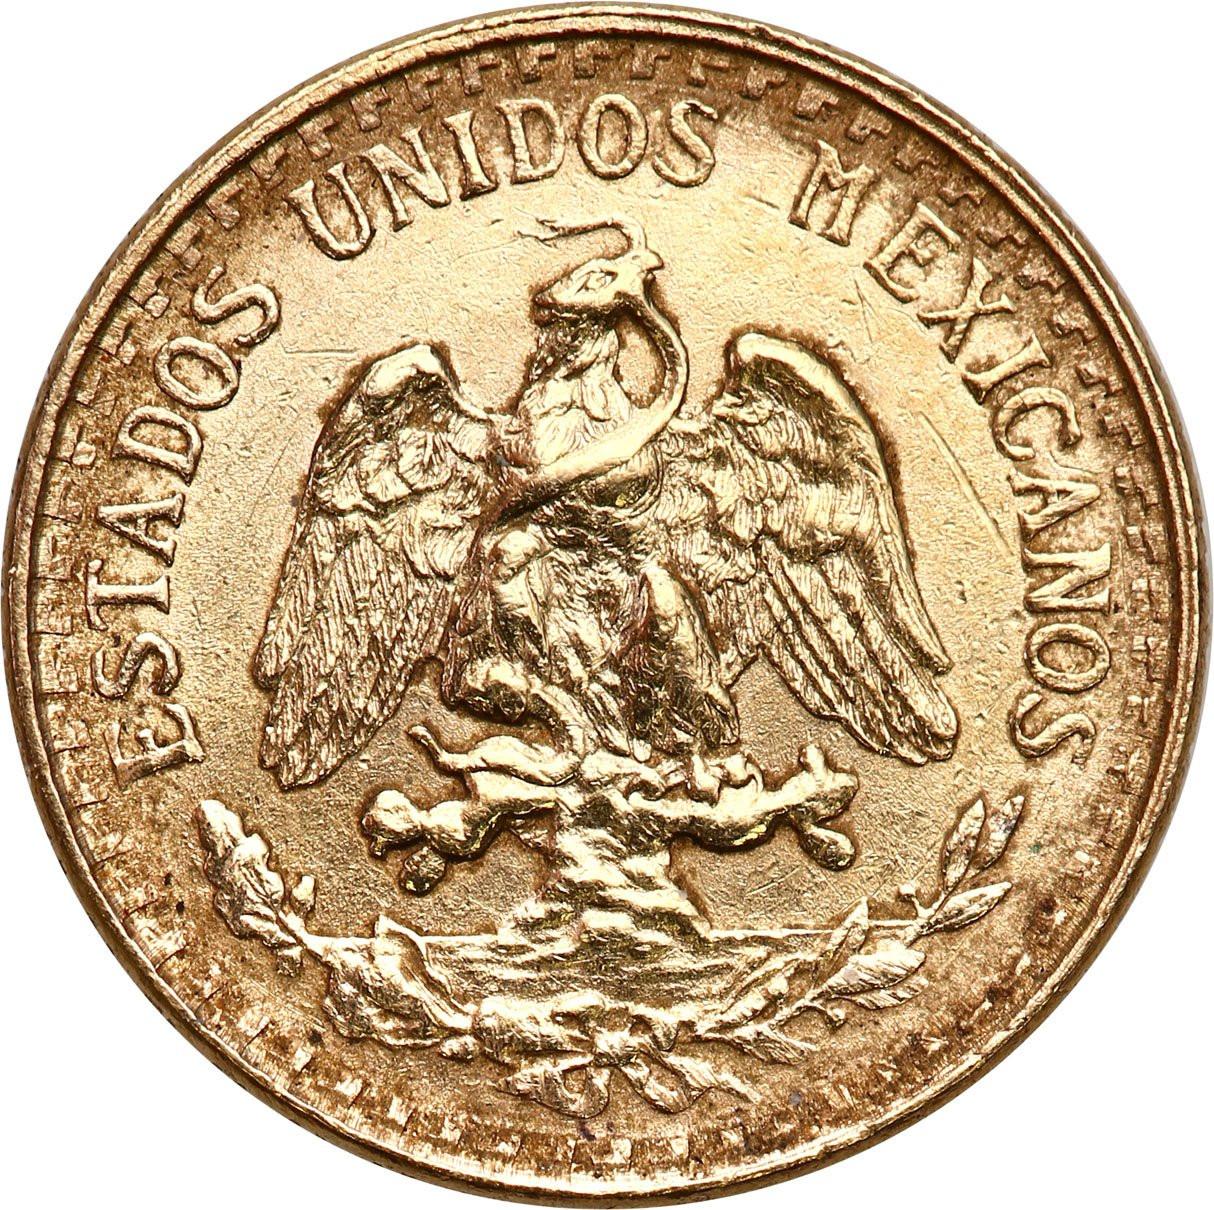 Meksyk. 2 pesos 1945